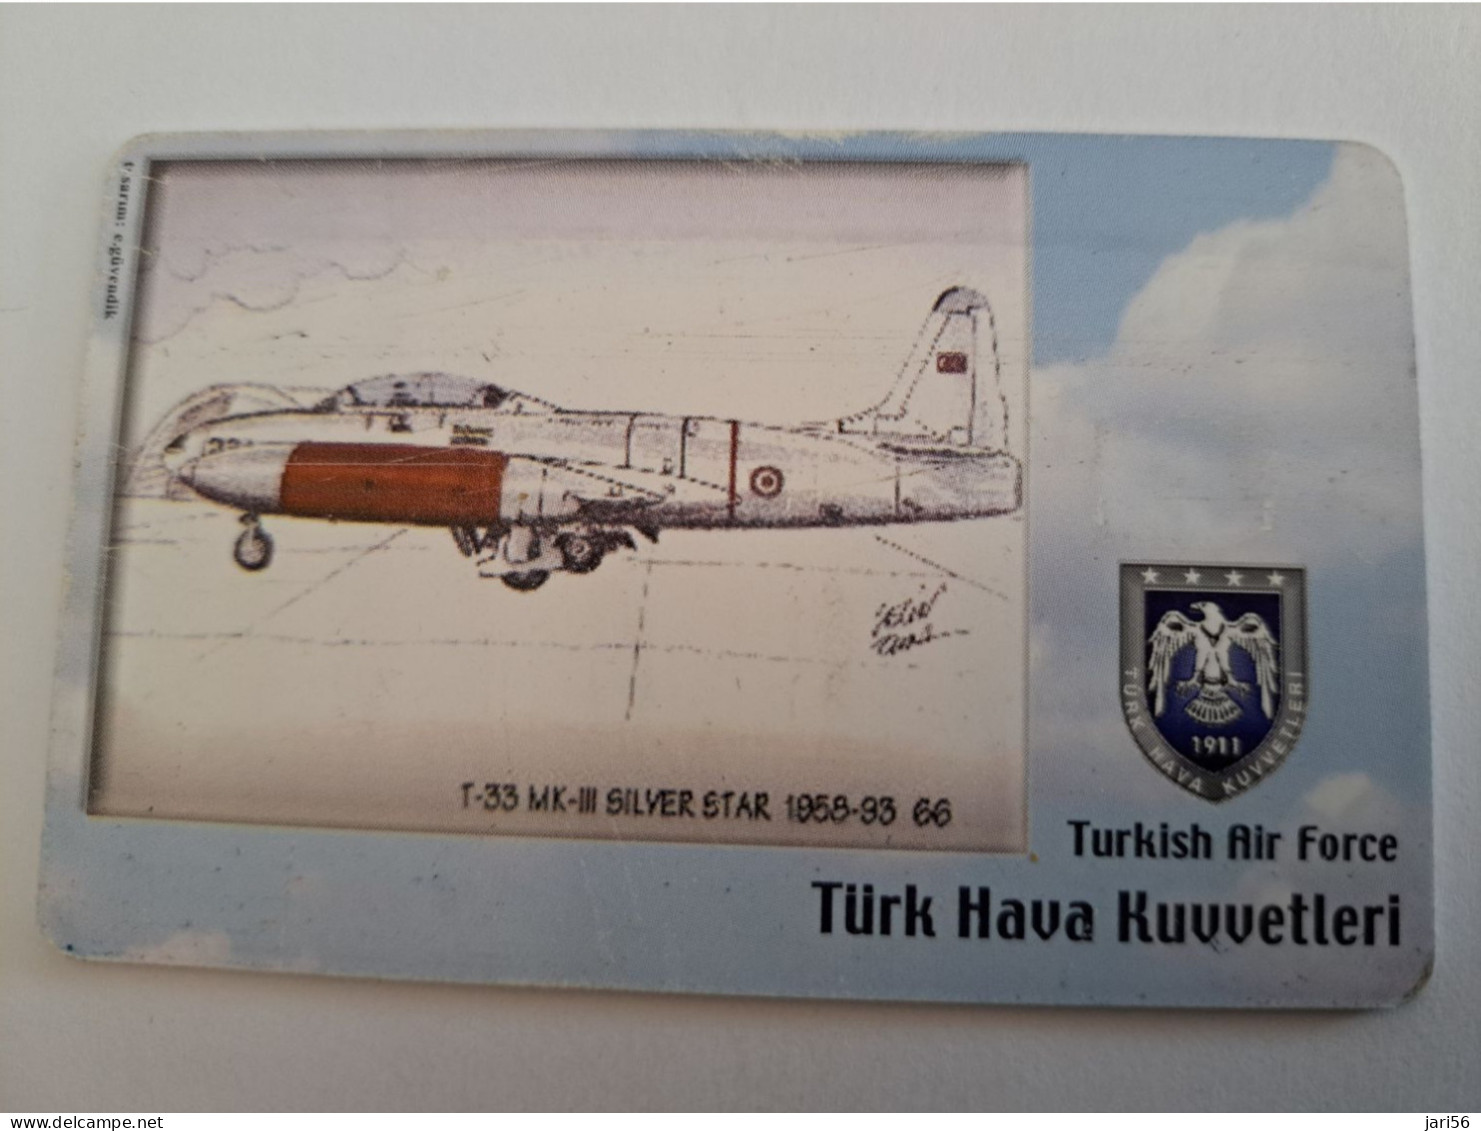 TURKIJE / 50 UNITS/ CHIPCARD/ TURKISH AIR FORCE  / DIFFERENT PLANES /        Fine Used Card  **15421** - Turkey